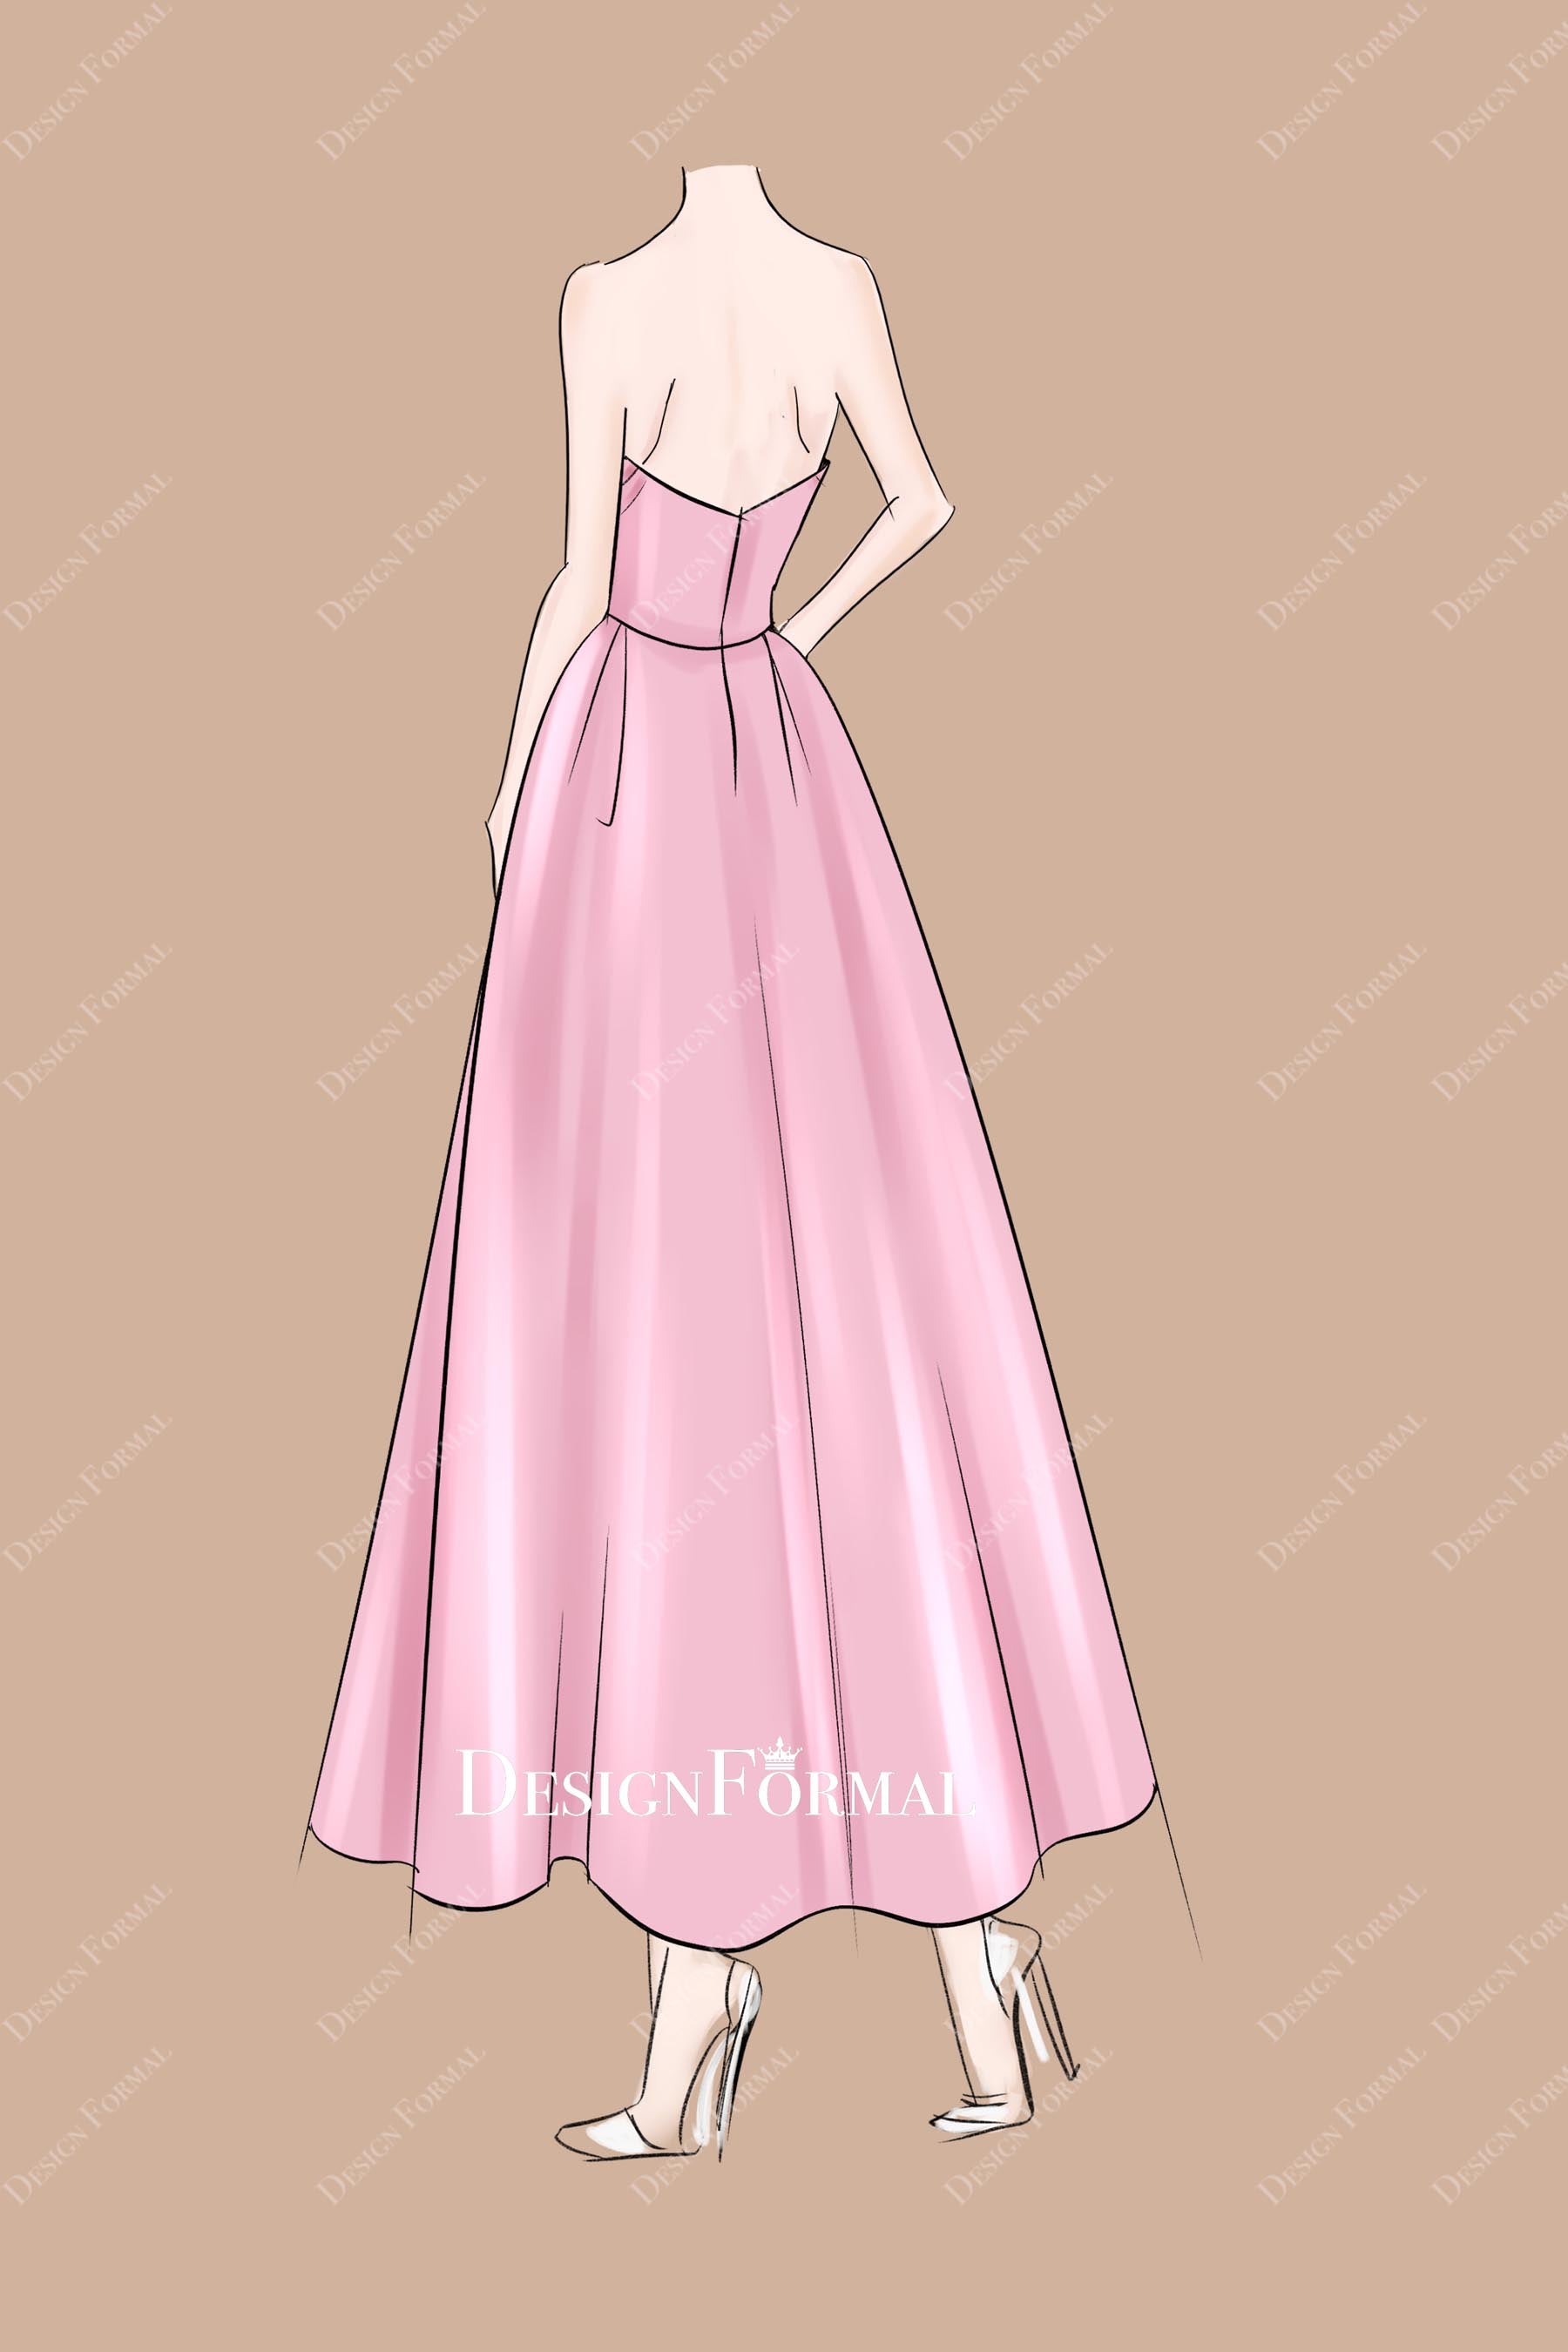 open back pink wedding guest dress designformal sketch